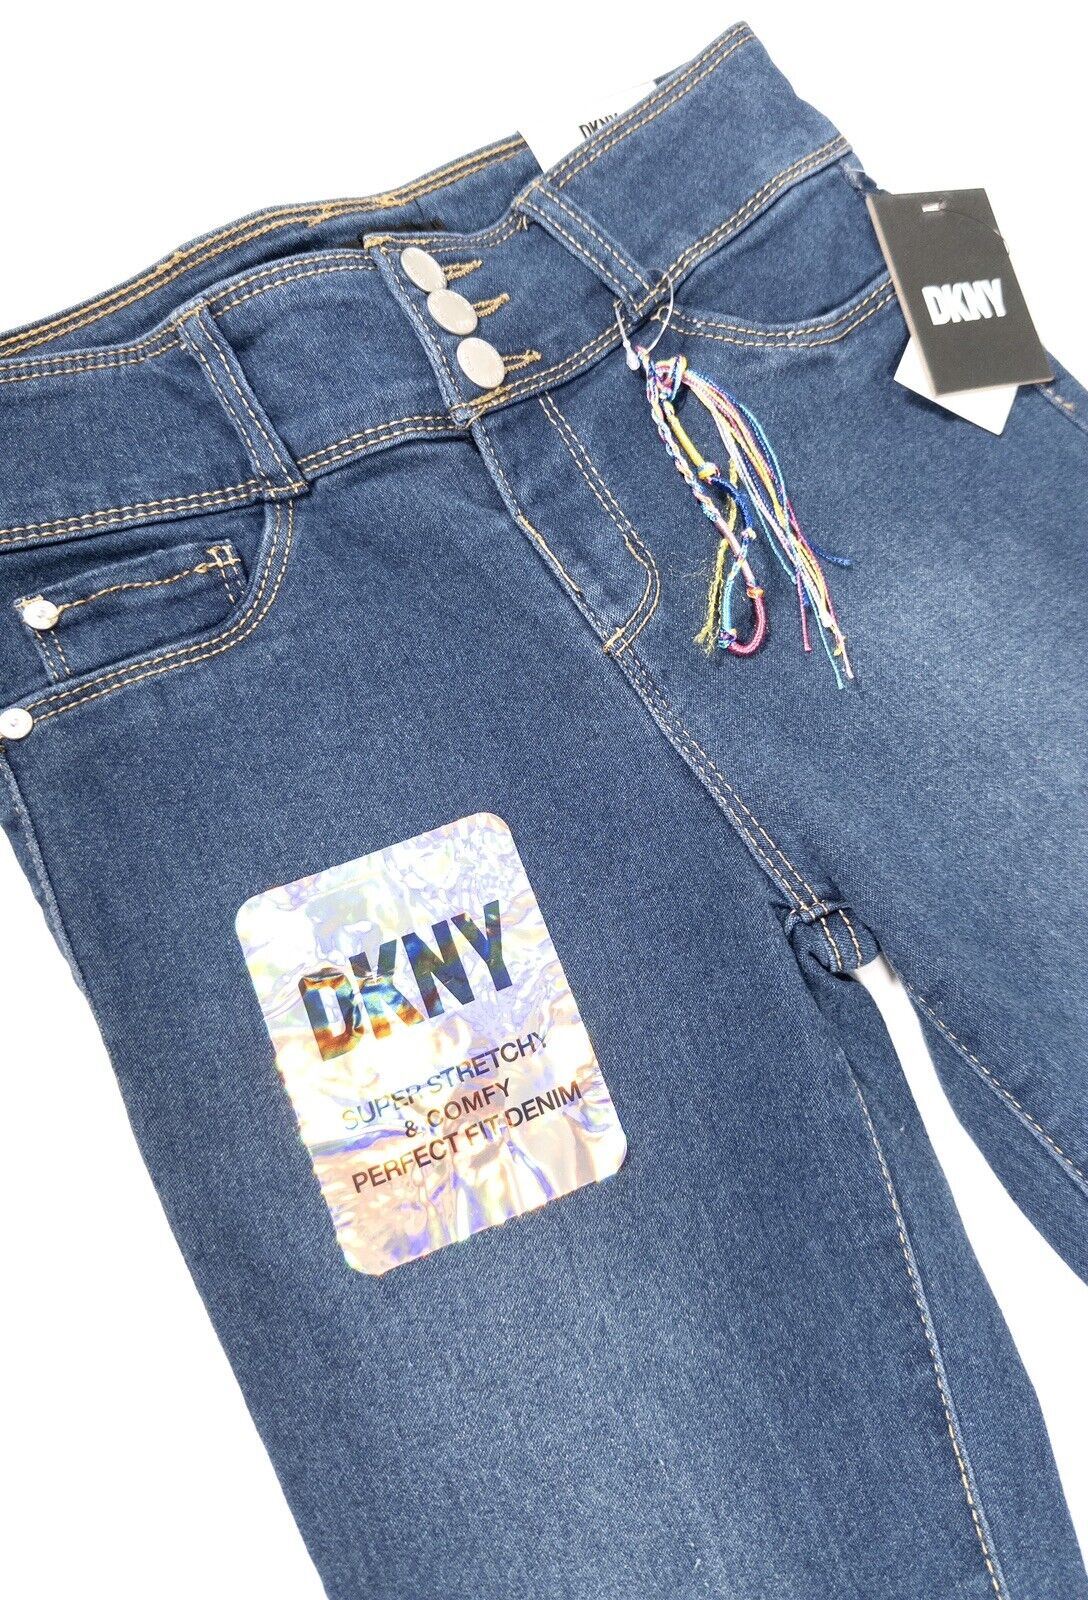 DKNY JEANS Kids Girls Stretch Blue Jeans Size UK 12 Years